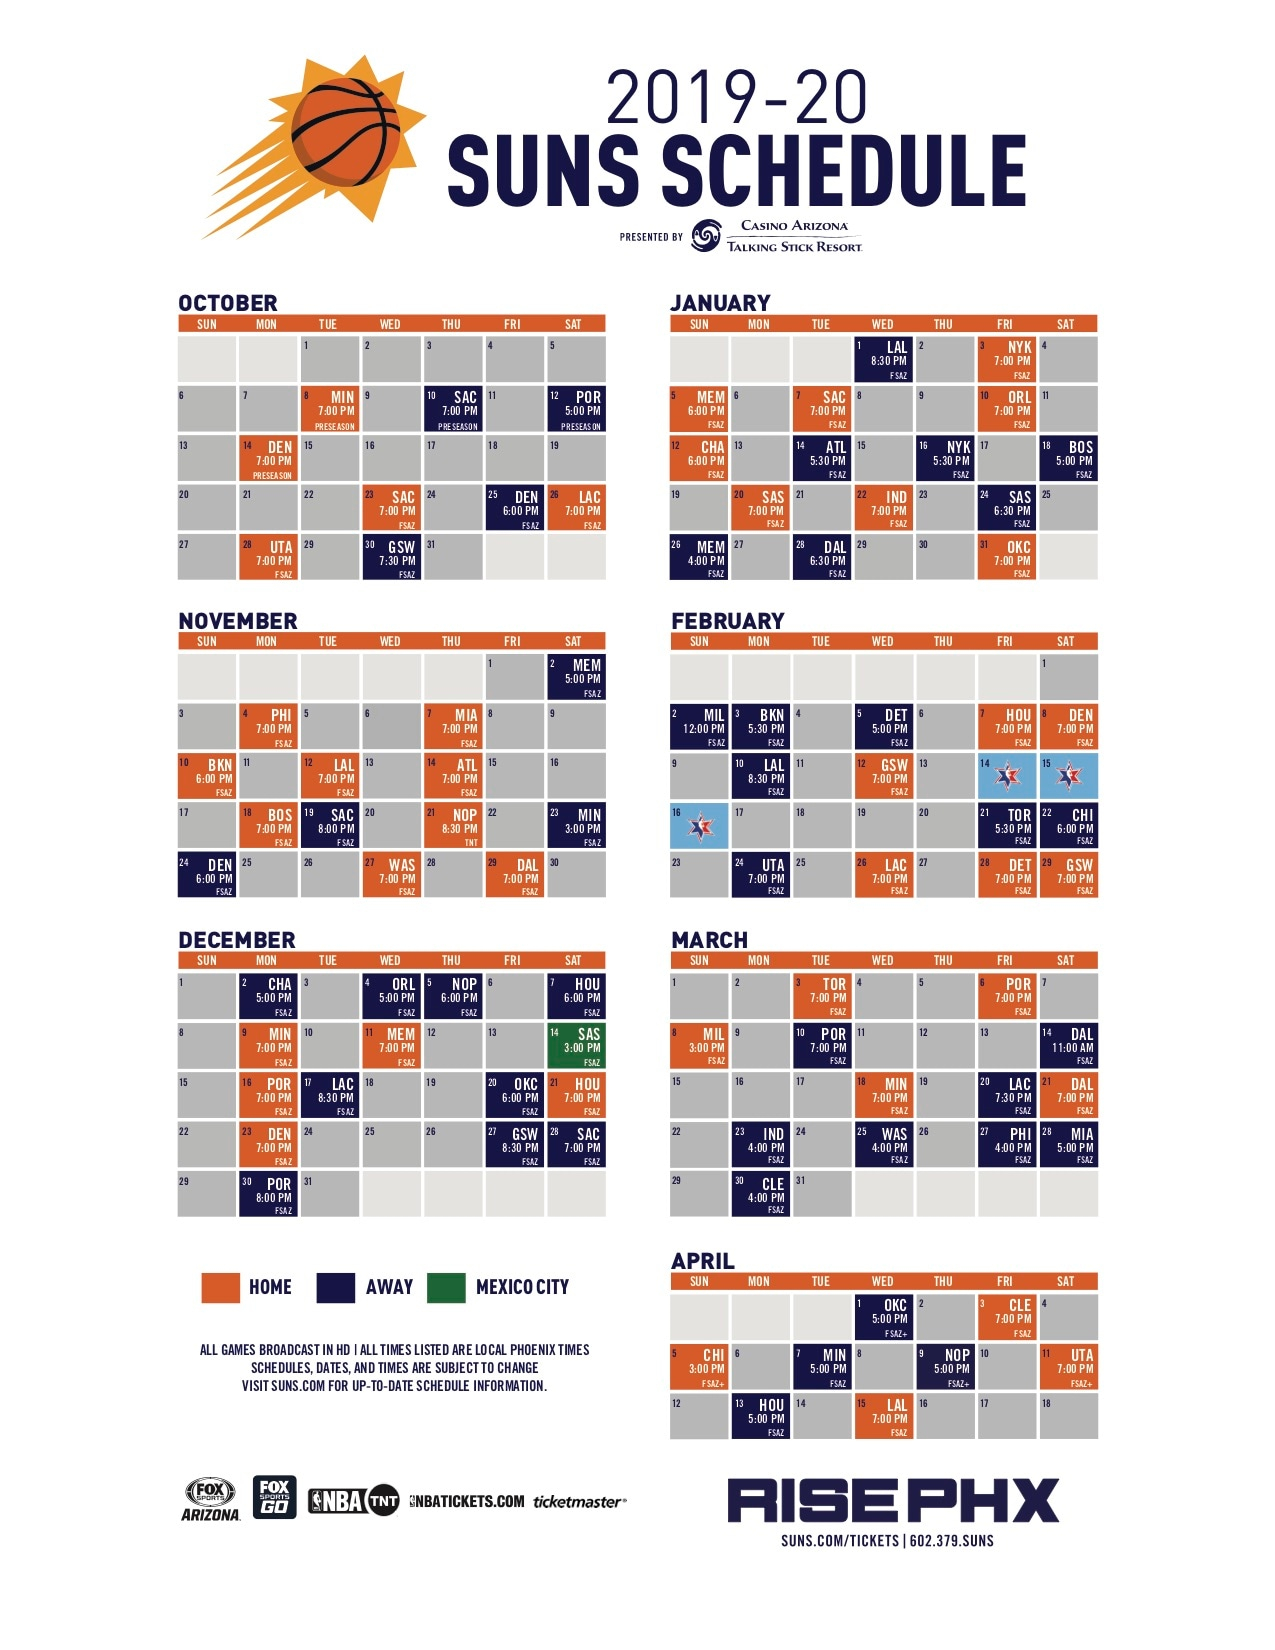 Suns broadcast schedule jpg Phoenix Suns